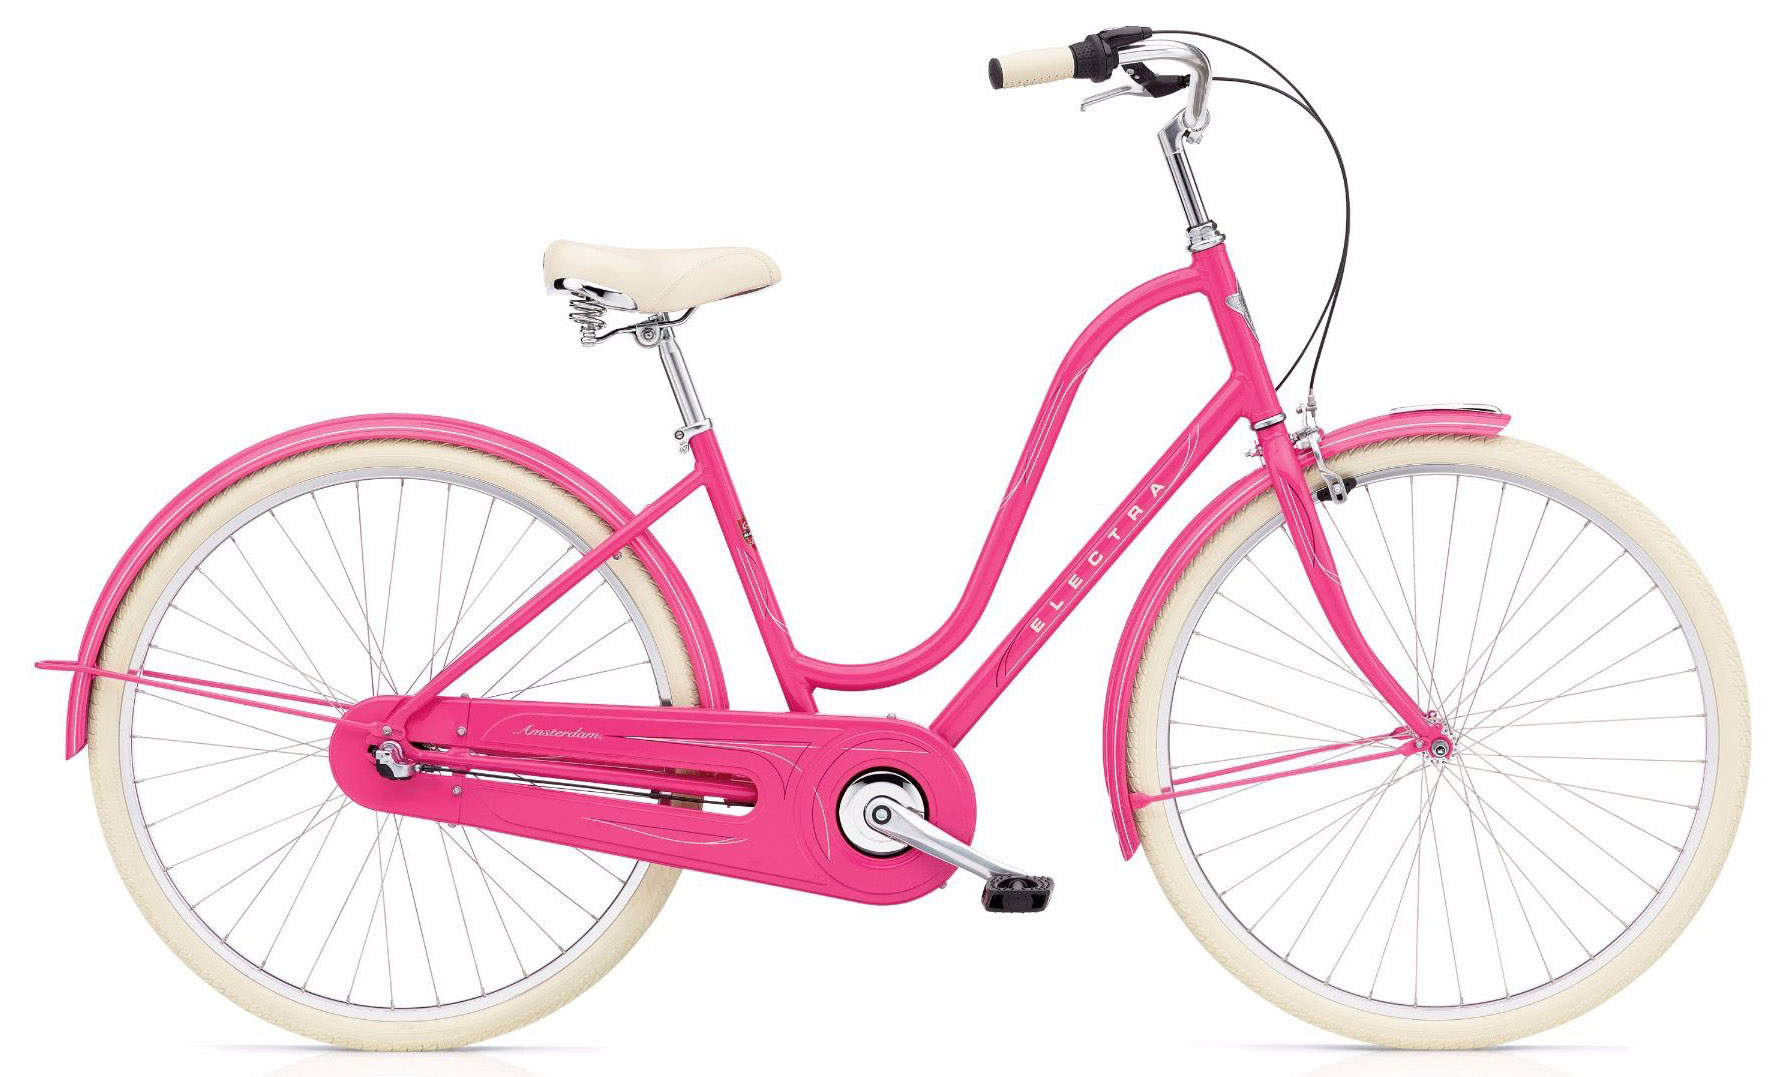  Велосипед Electra Amsterdam Original 3i Ladies 2020